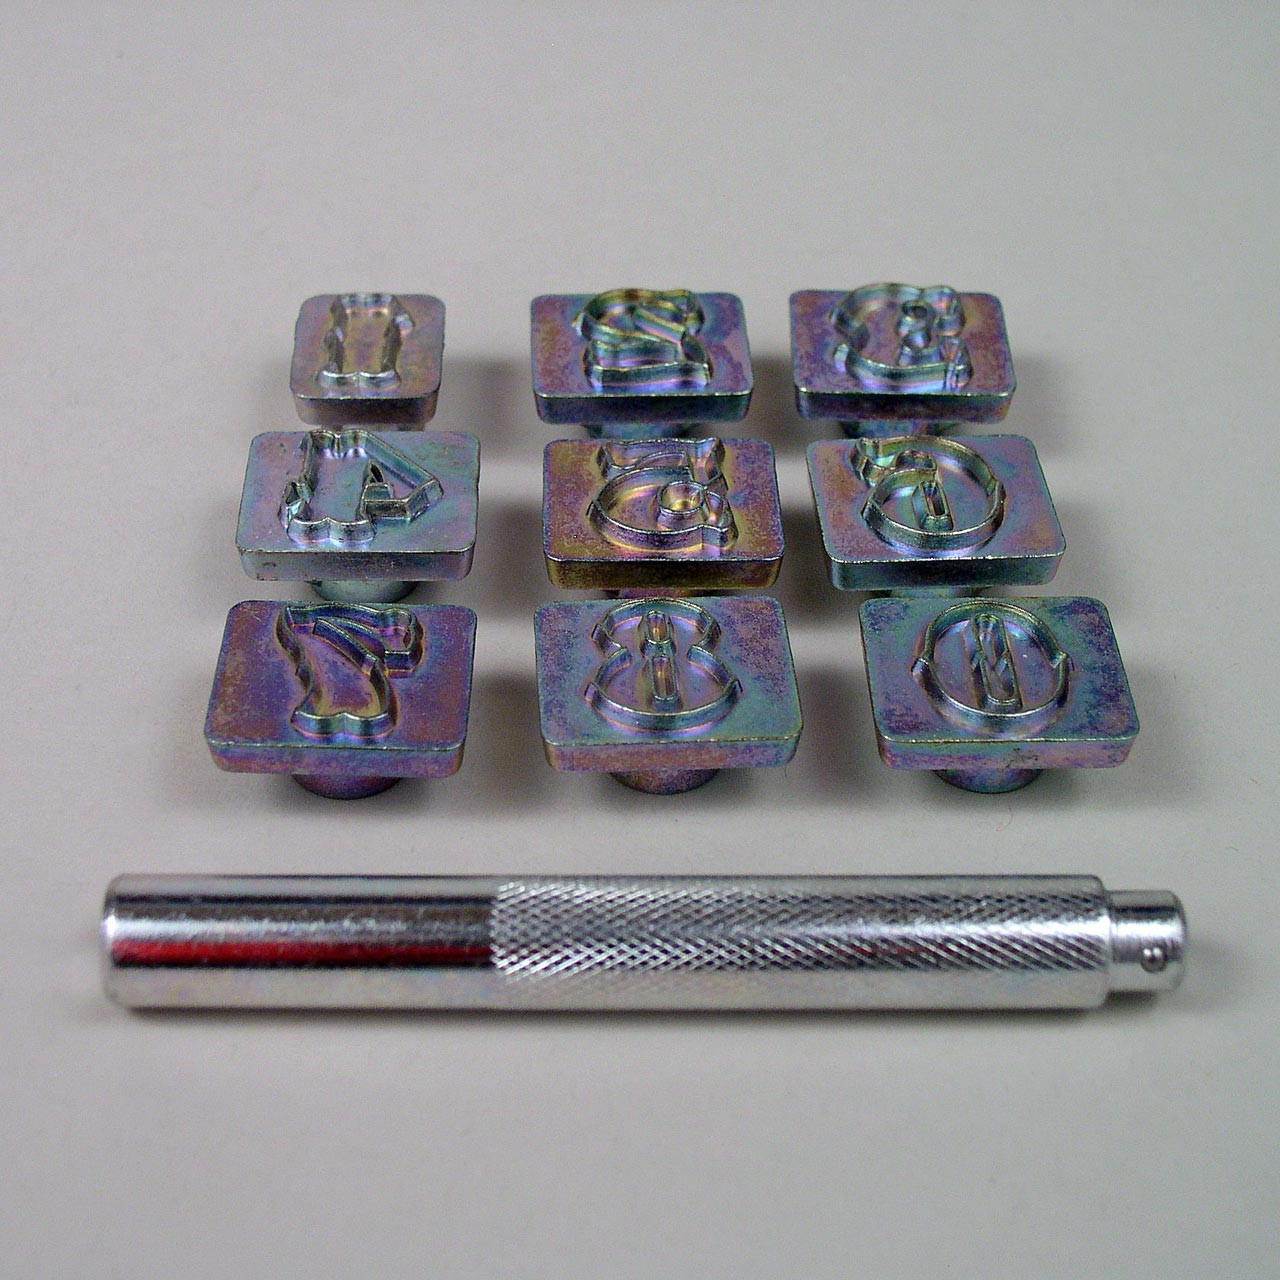 Alphabet & Number Stamp Set 1/4 - Leathersmith Designs Inc.